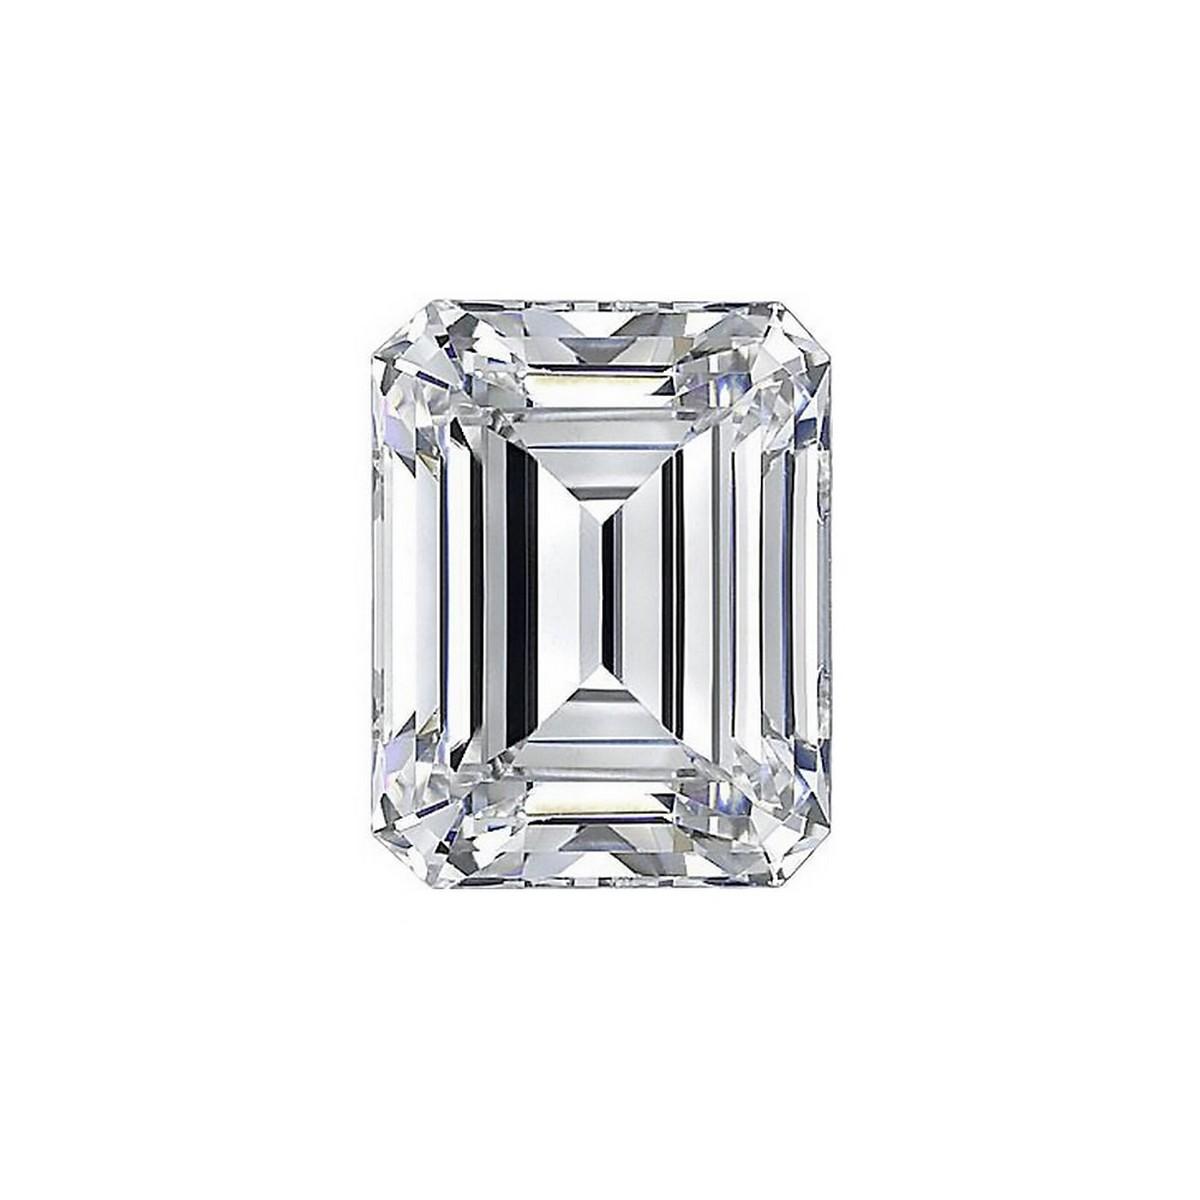 1.98 ctw. VS2 IGI Certified Emerald Cut Loose Diamond (LAB GROWN)